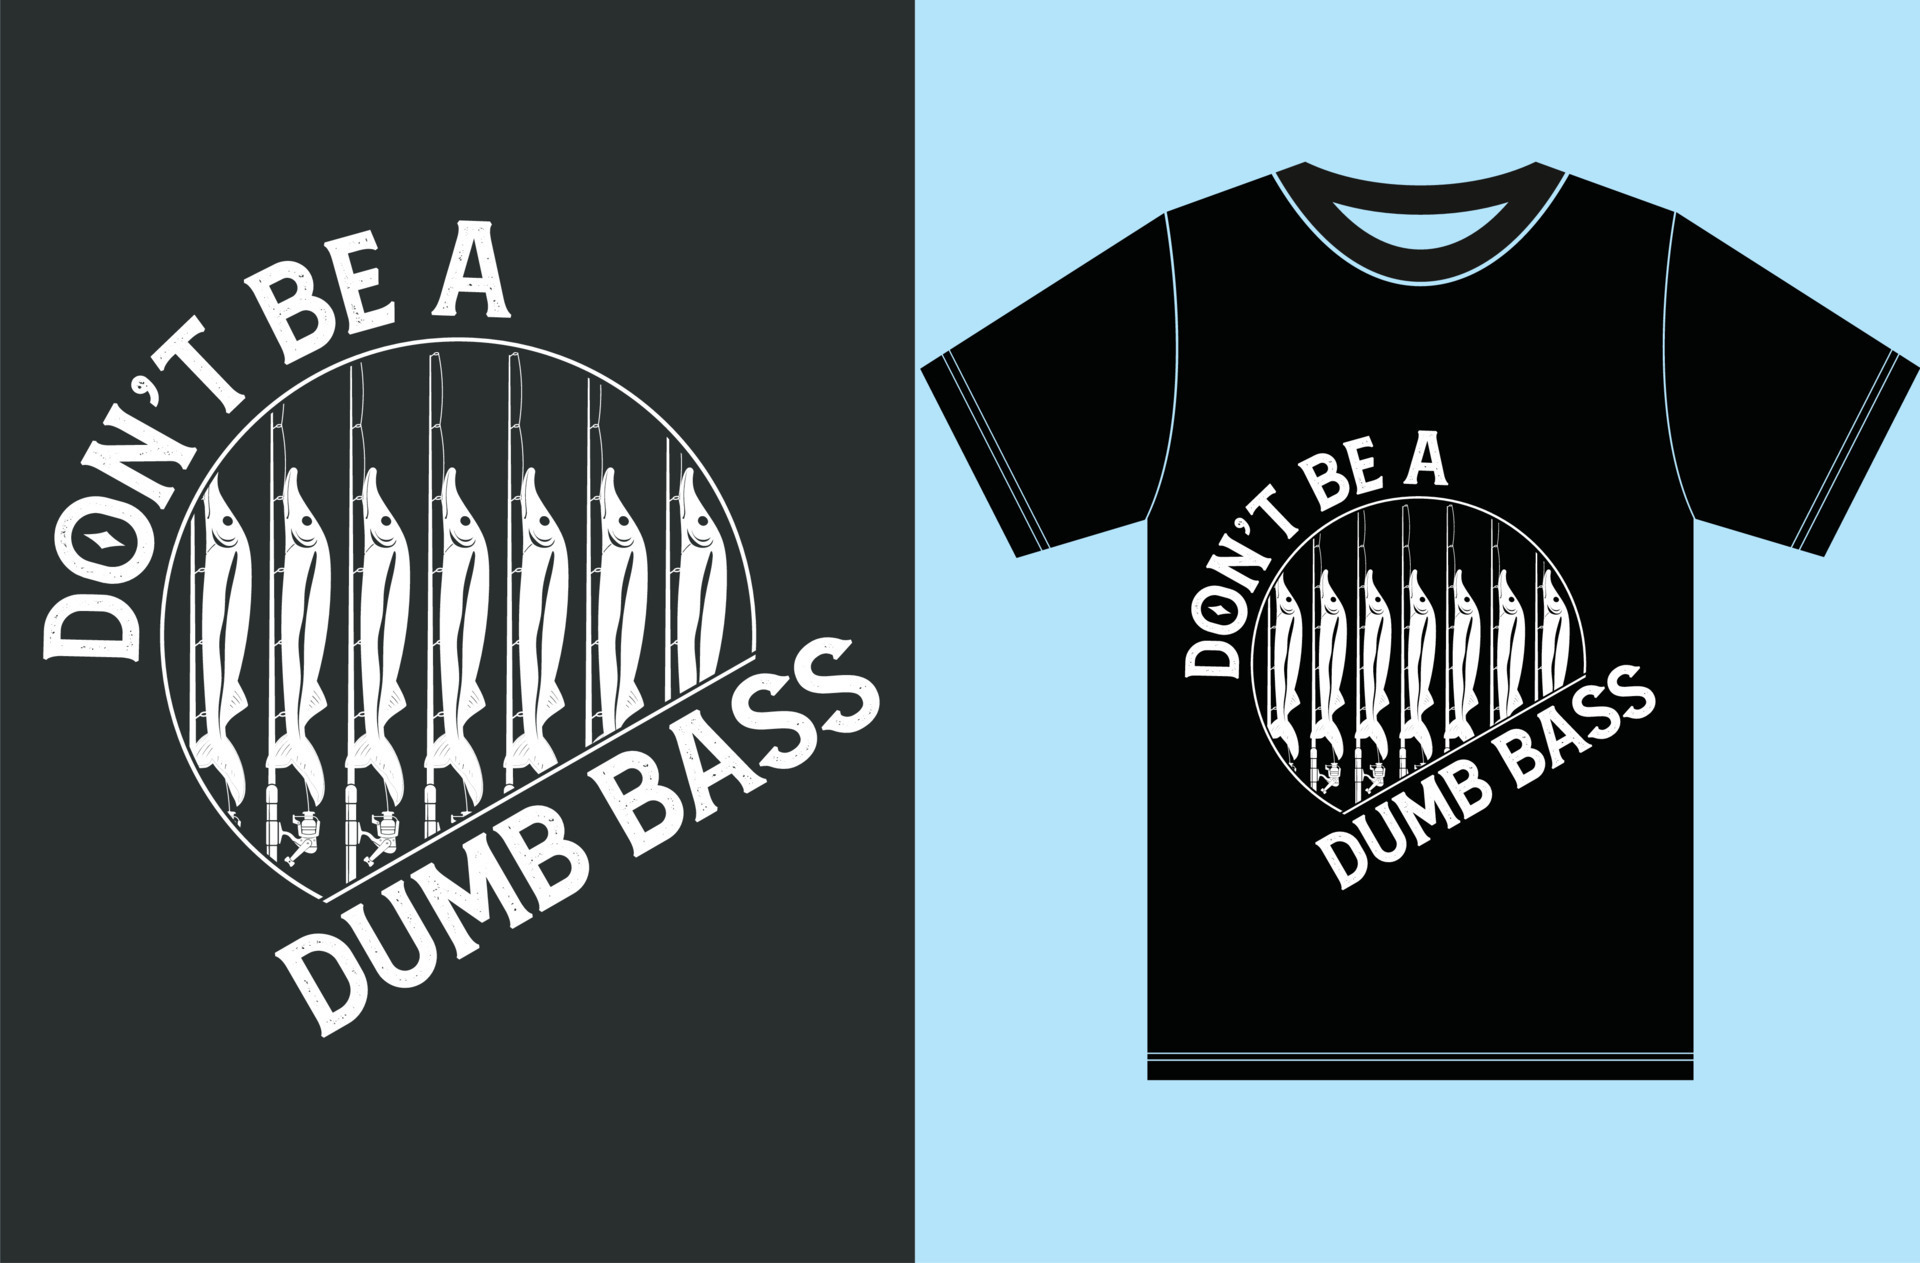 https://static.vecteezy.com/system/resources/previews/006/116/047/original/don-t-be-a-dumb-bass-t-shirt-bass-fishing-funny-shirt-vector.jpg